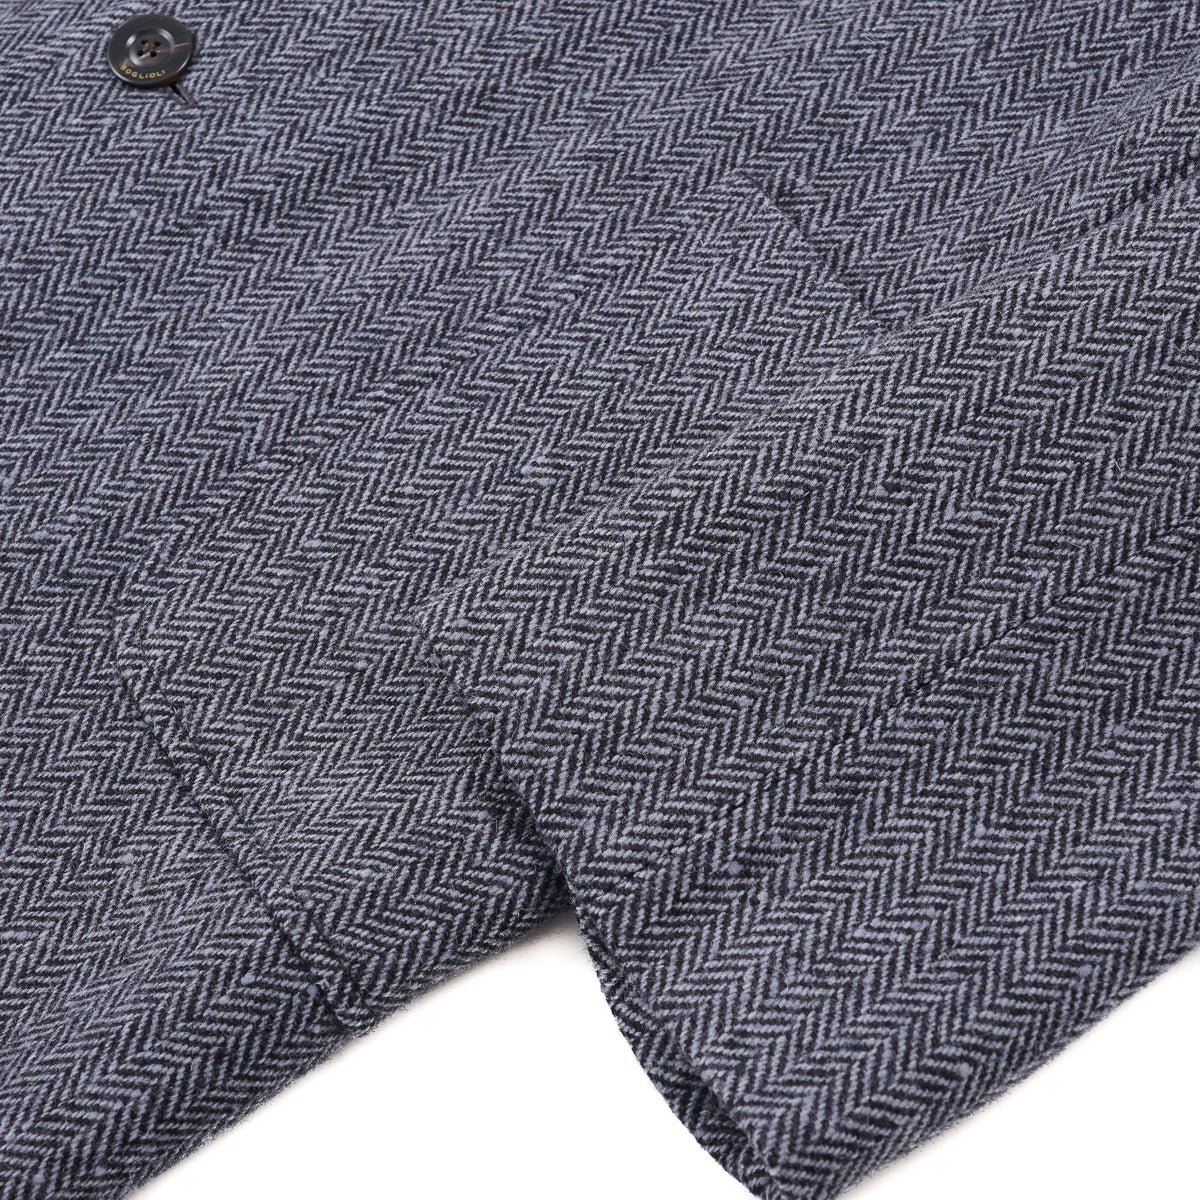 Boglioli Soft-Constructed Wool Overcoat - Top Shelf Apparel